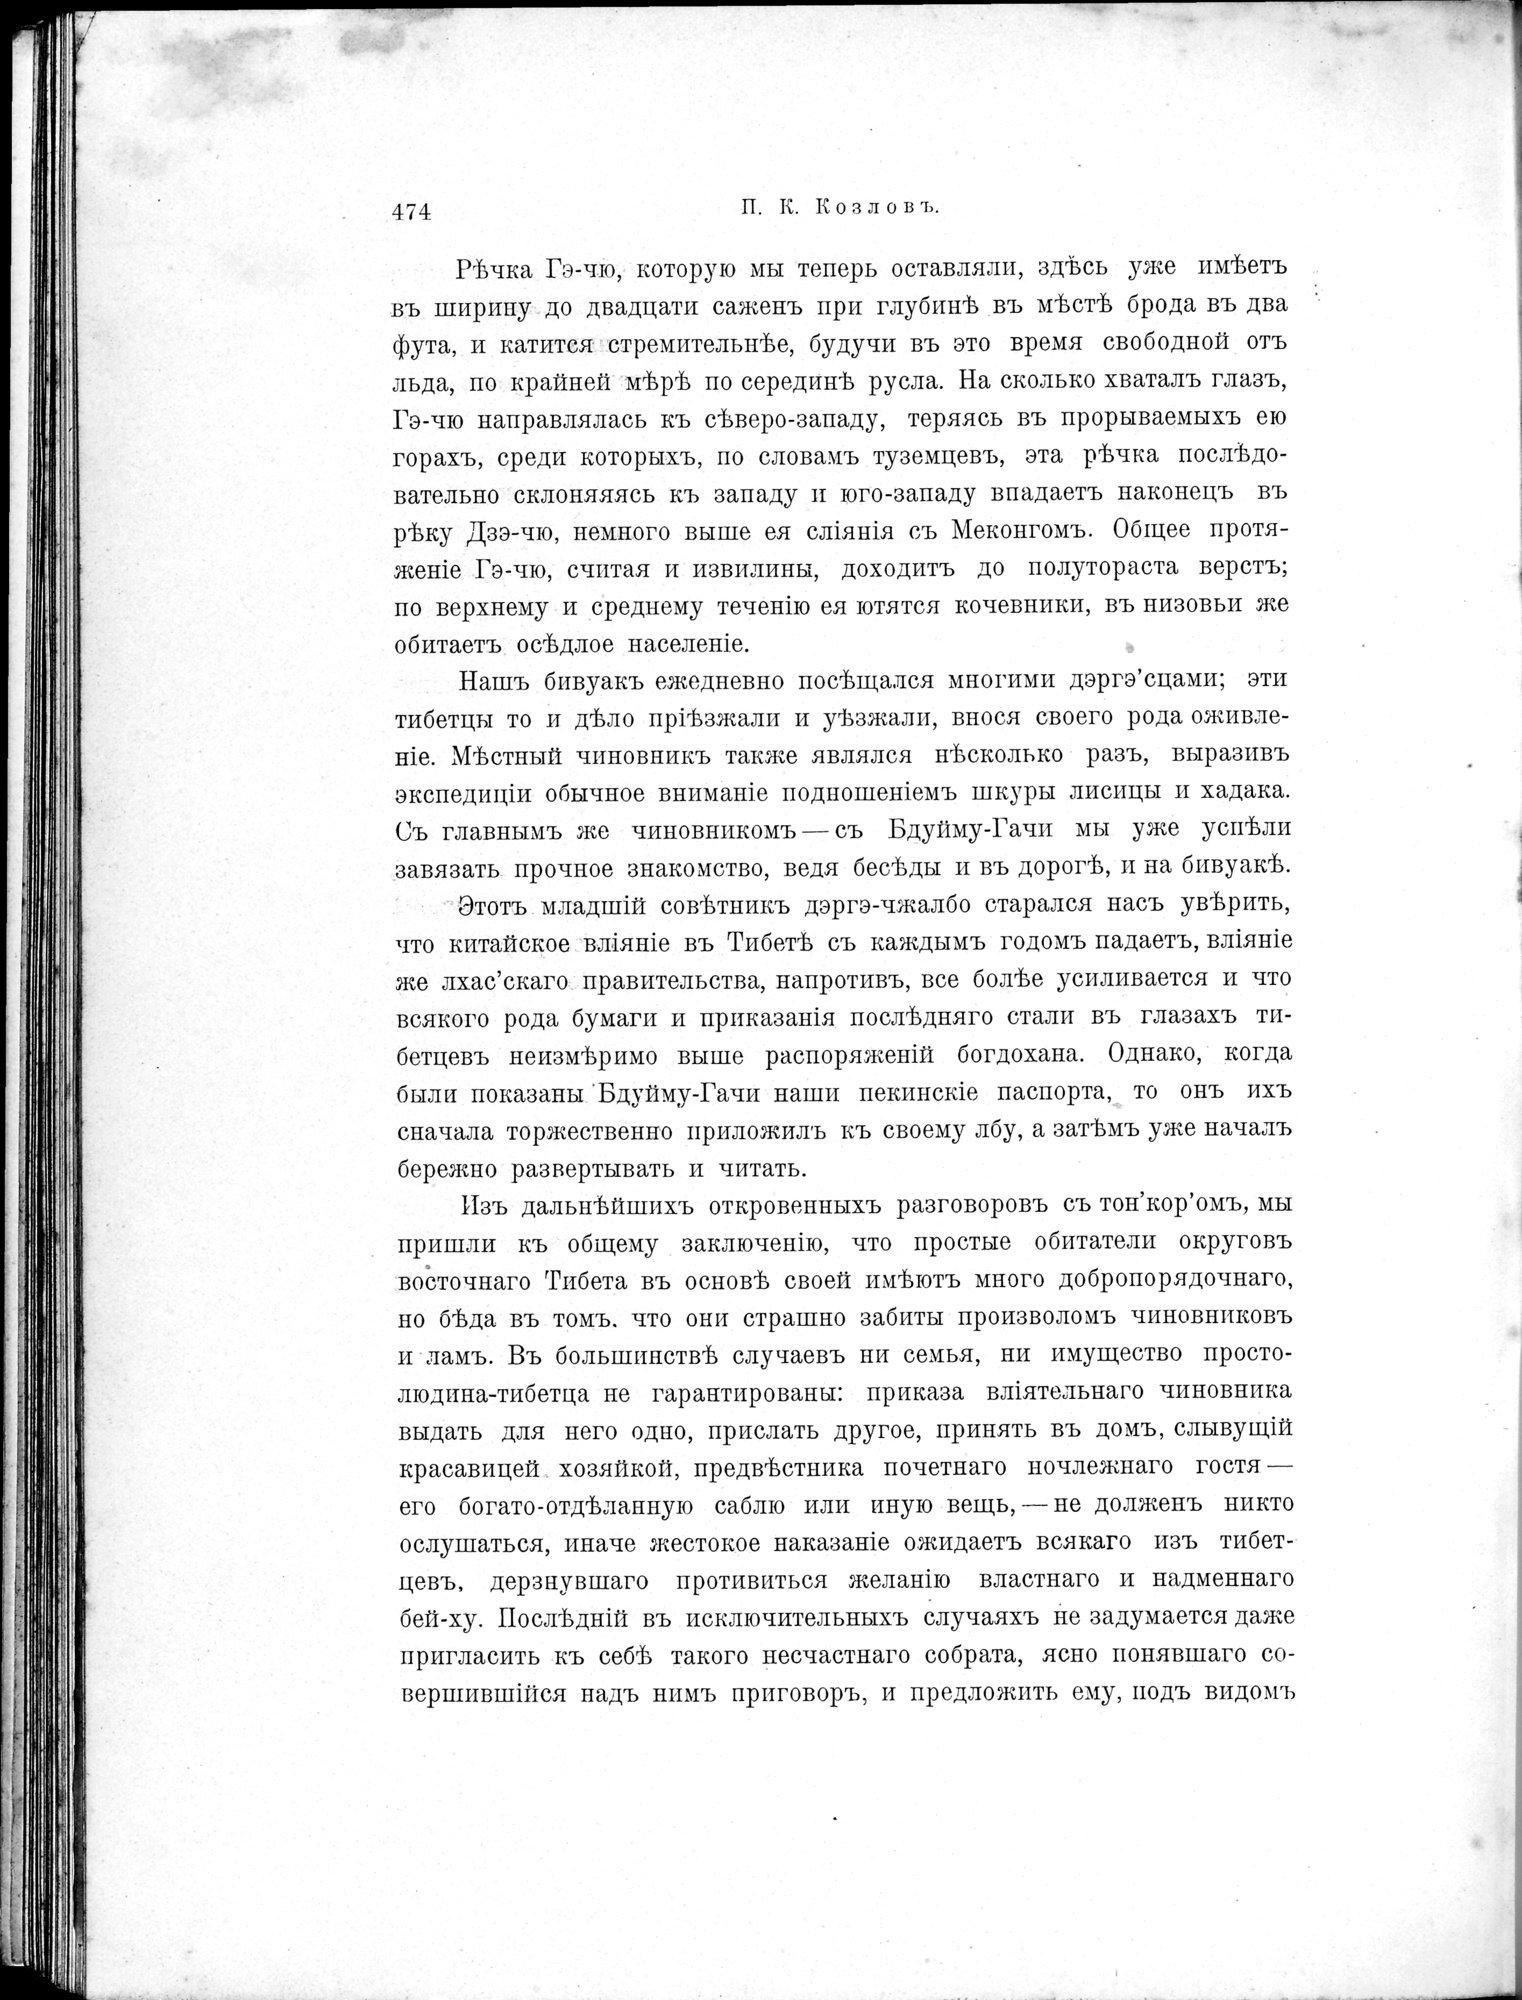 Mongoliia i Kam : vol.2 / Page 280 (Grayscale High Resolution Image)